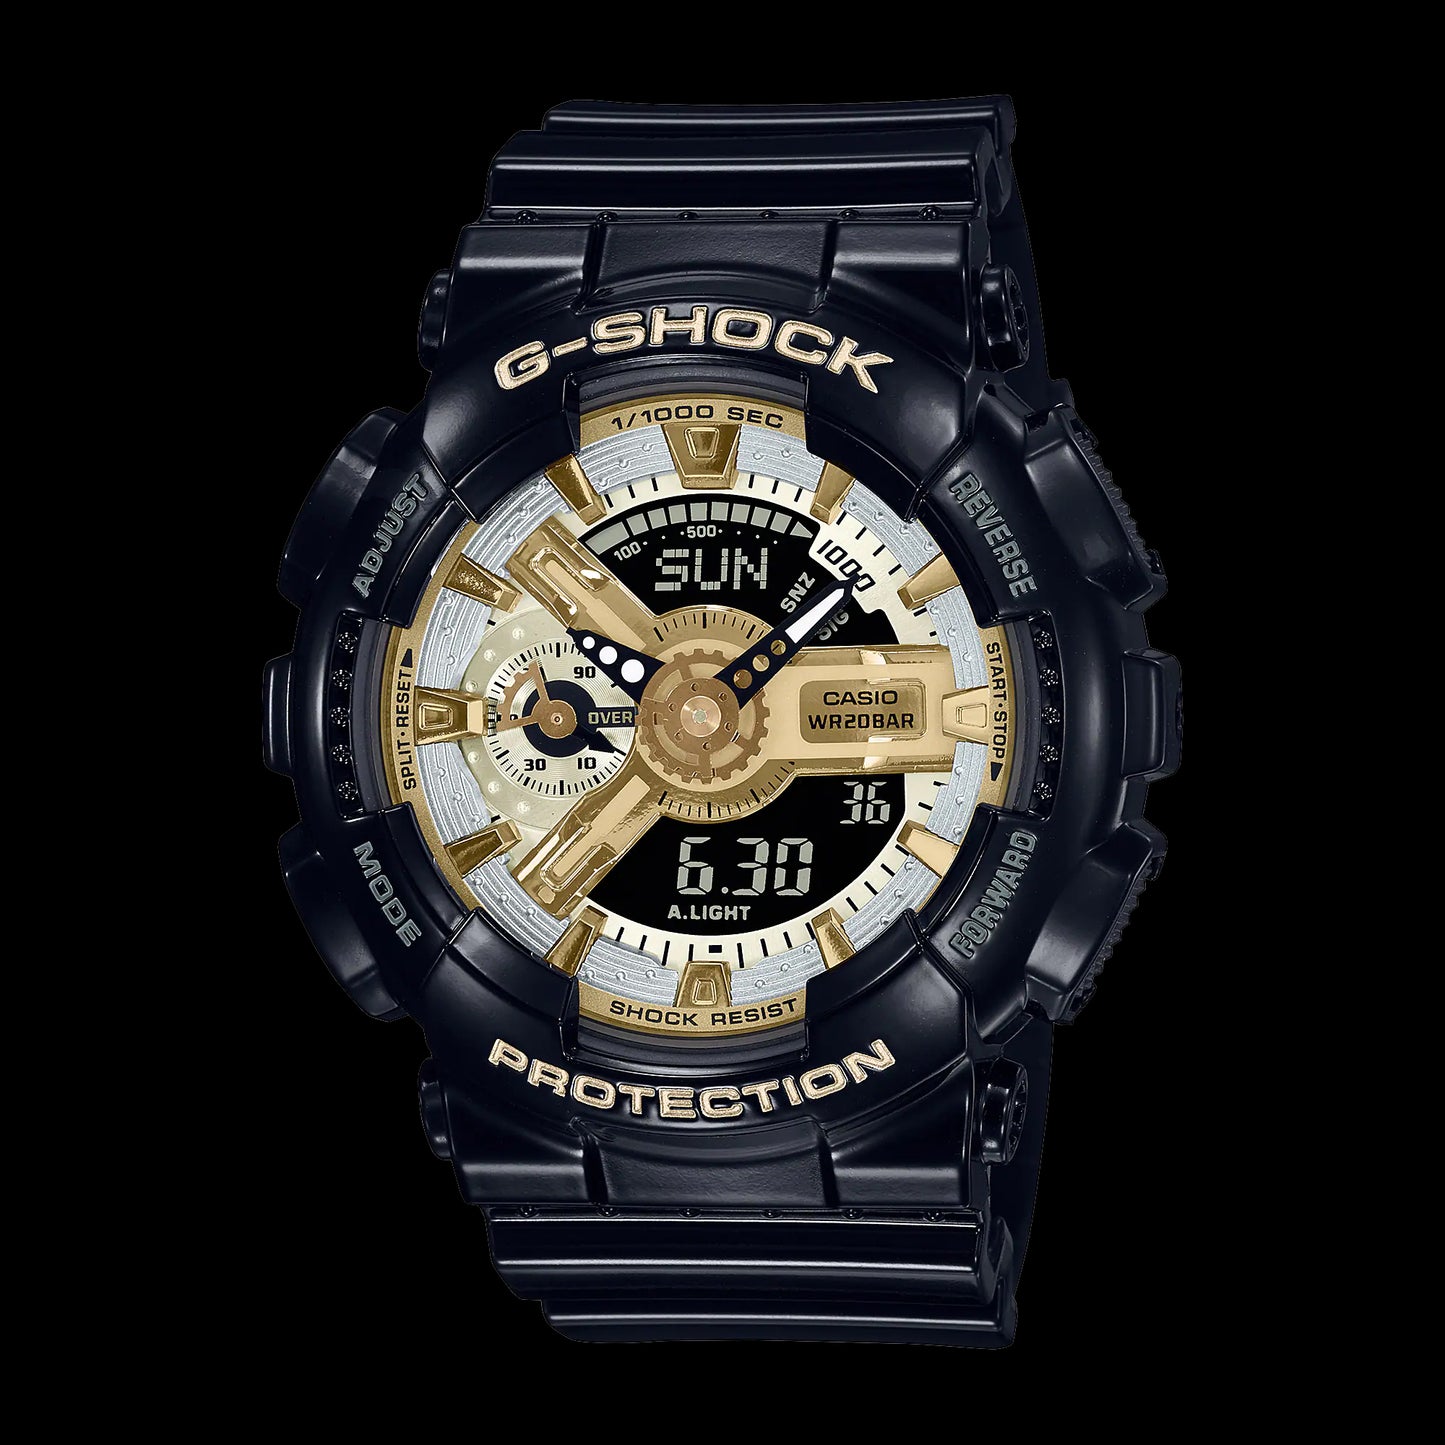 Casio G-Shock GShock S Series Analog-Digital Black x Gold Ladies' Watch GMAS110GB-1ADR